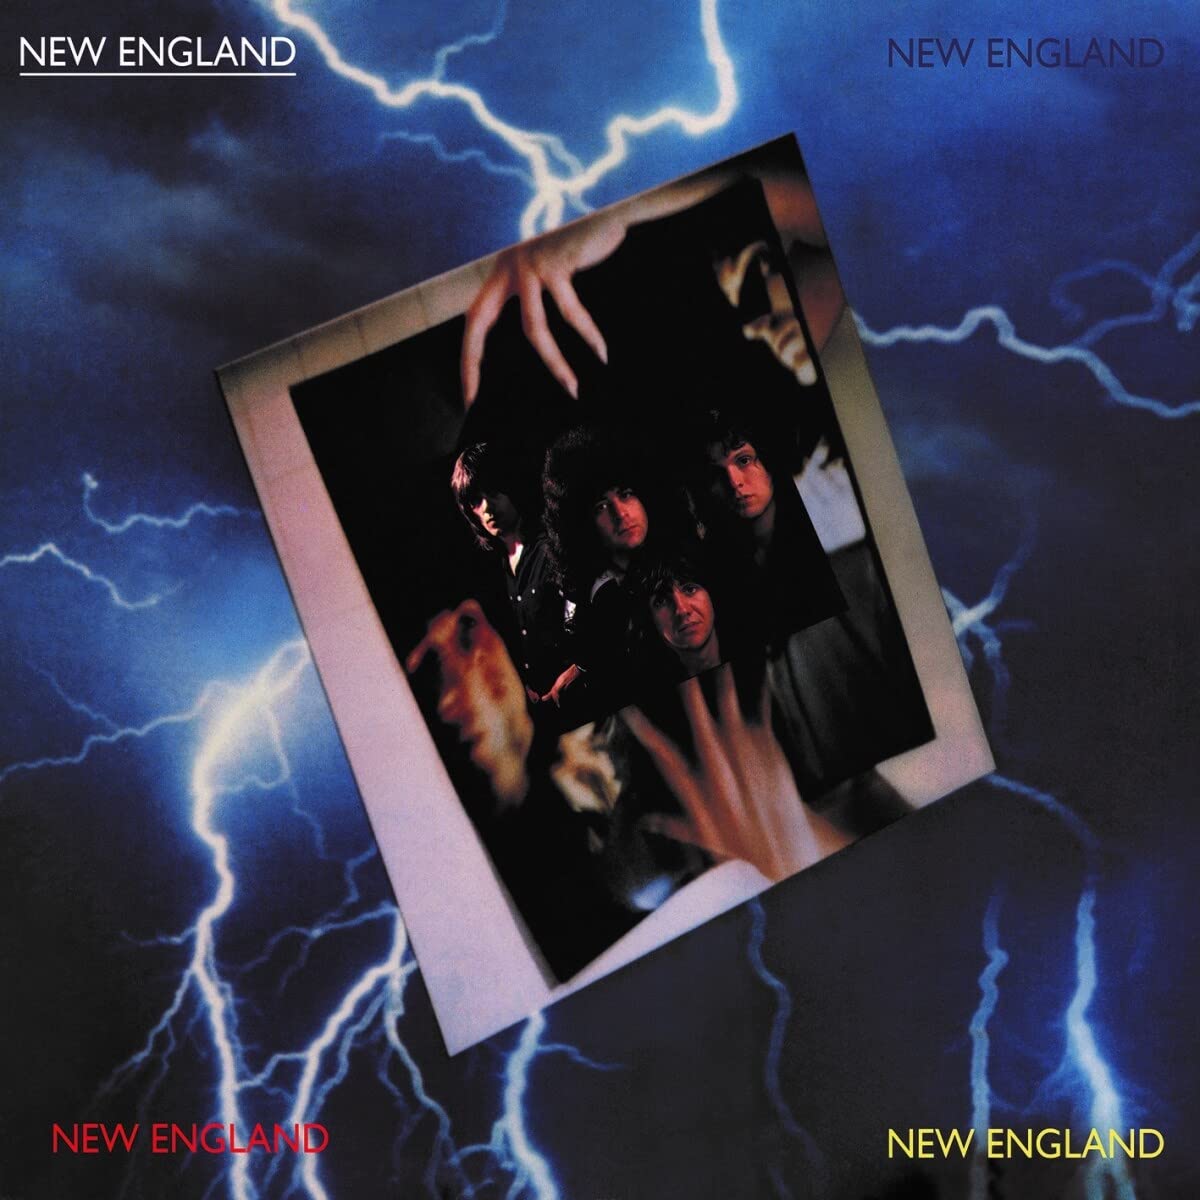 New England - New England (Rock Candy remaster with 6 bonus tracks) - CD - New